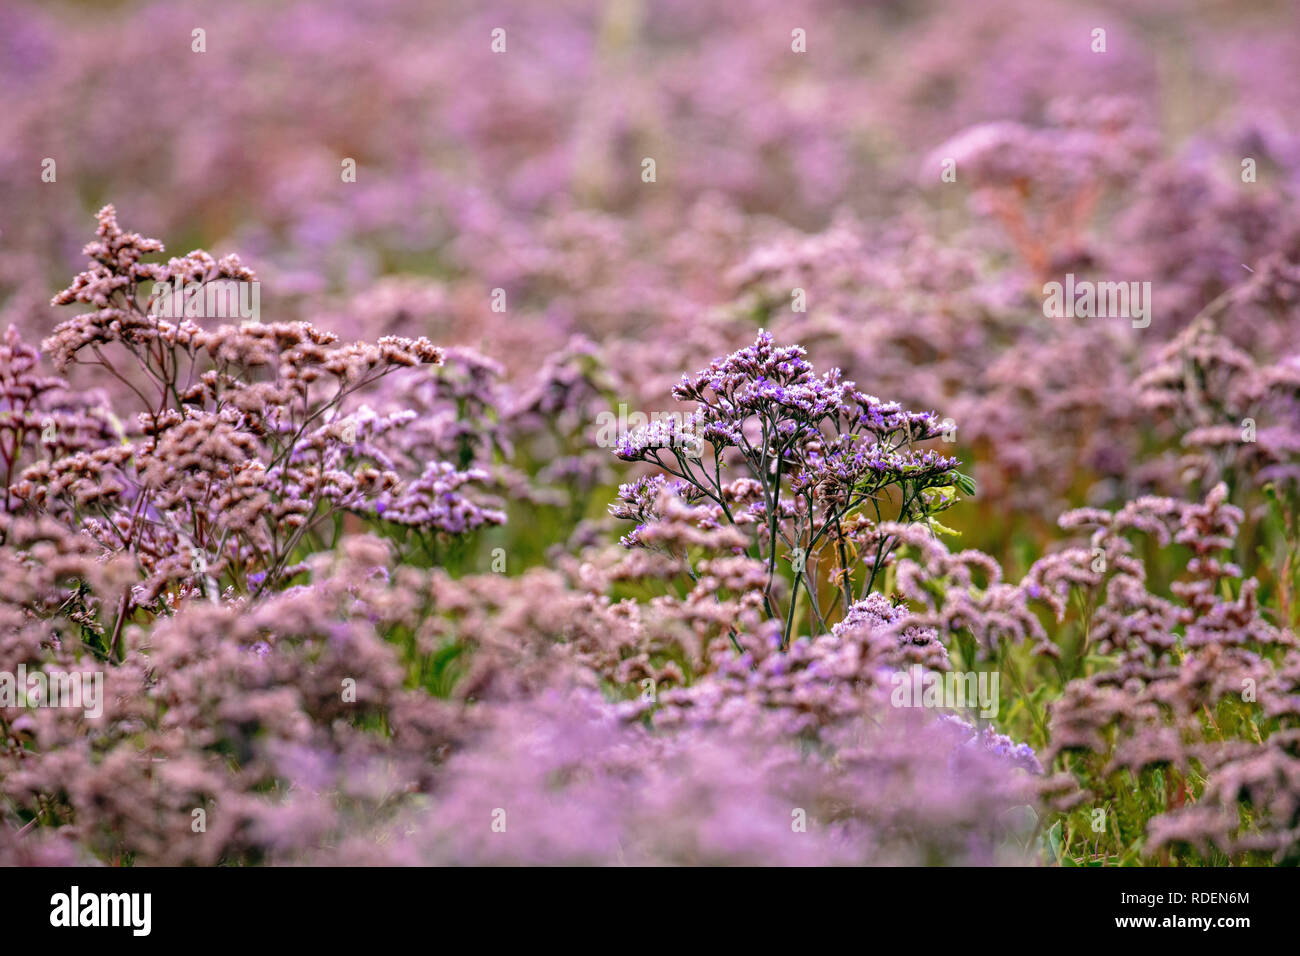 The Netherlands, Rottumeroog or Rottum Island (uninhabited), belonging to Wadden Sea Islands. Flowering Common Sea lavender (Limonium vulgare). Stock Photo